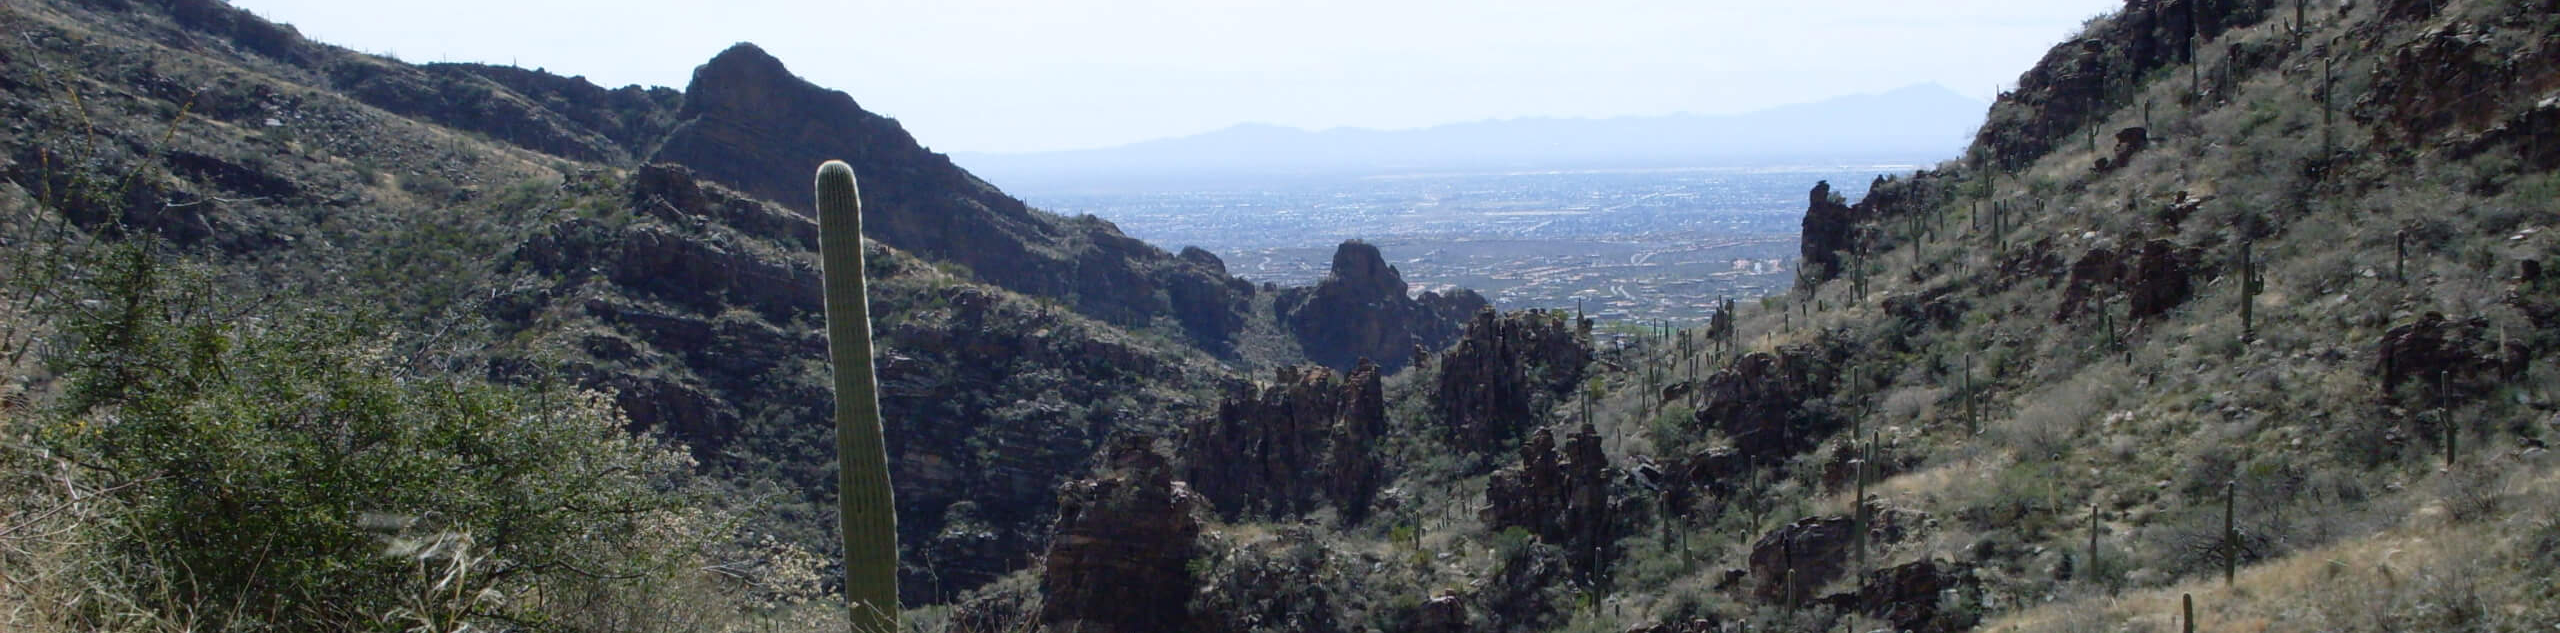 Window Peak via Ventana Canyon Trail